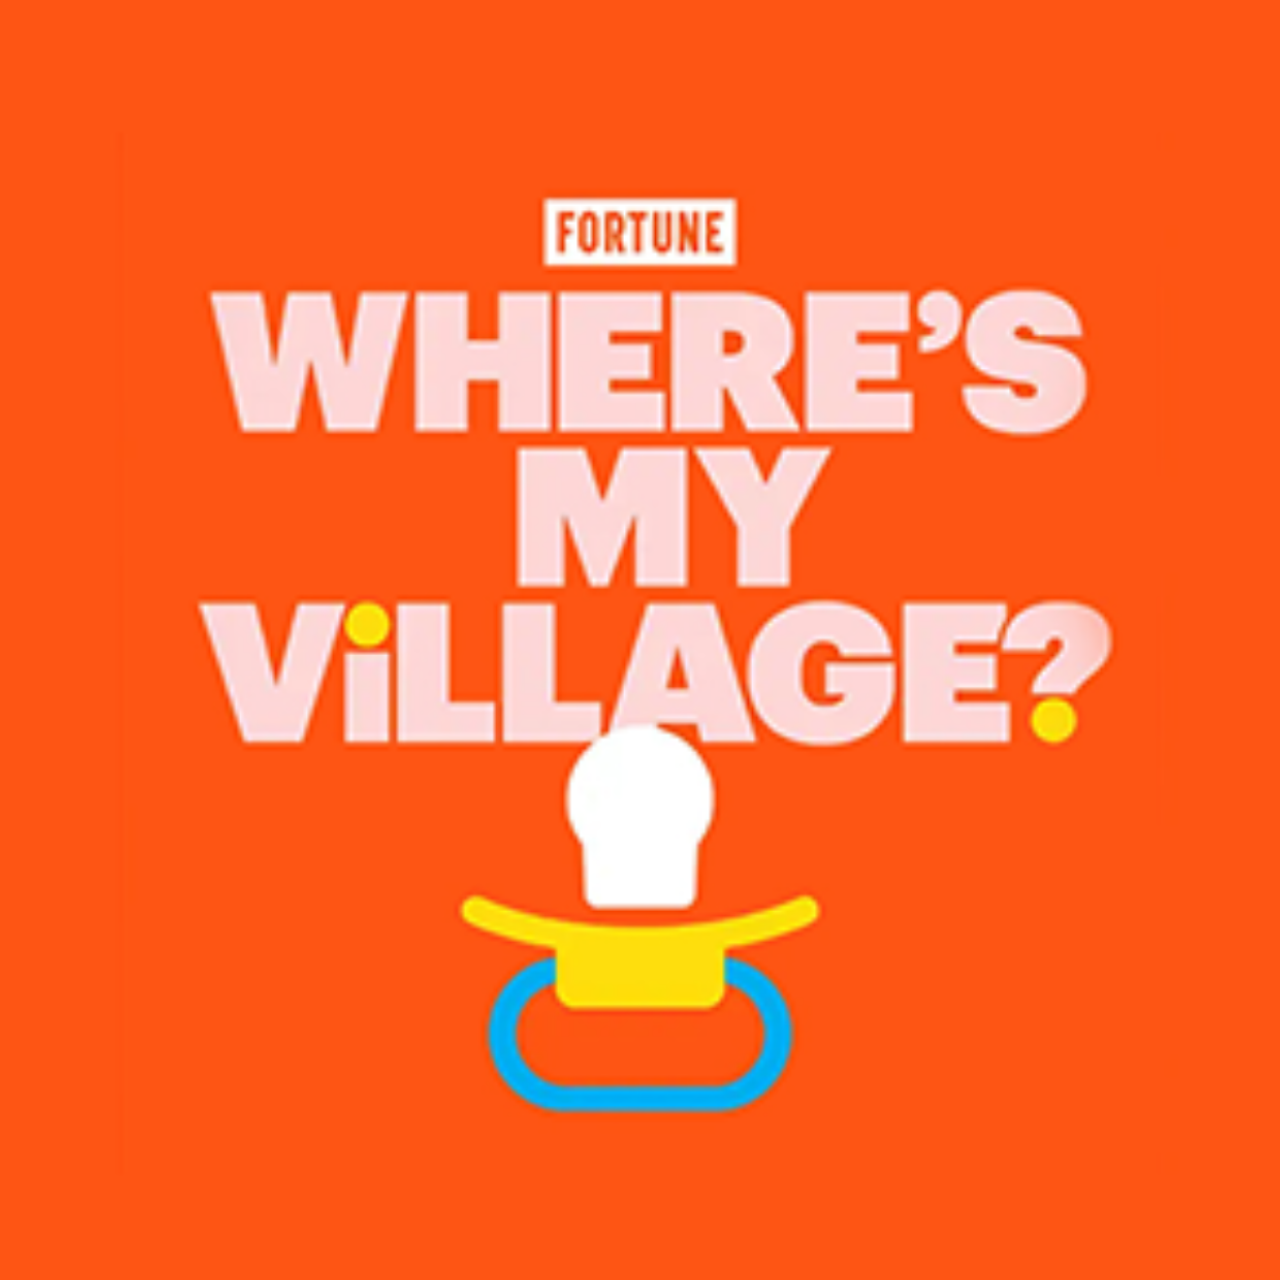 Fortune: Where's my village? logo